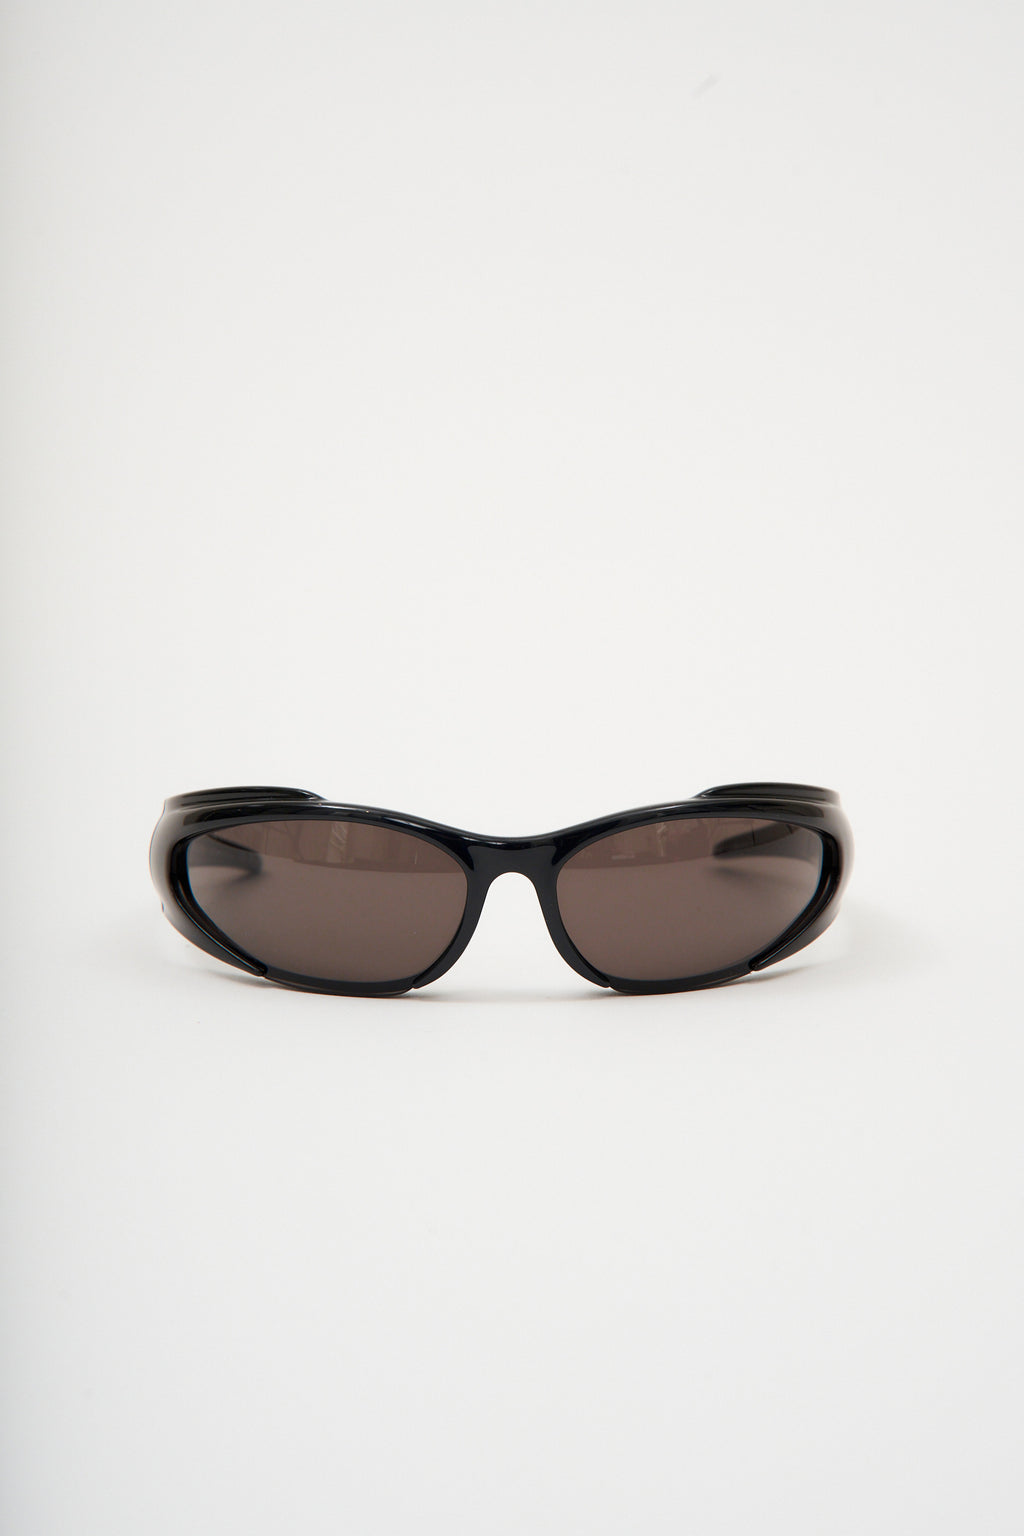 Wraparound Xpander Black Sunglasses